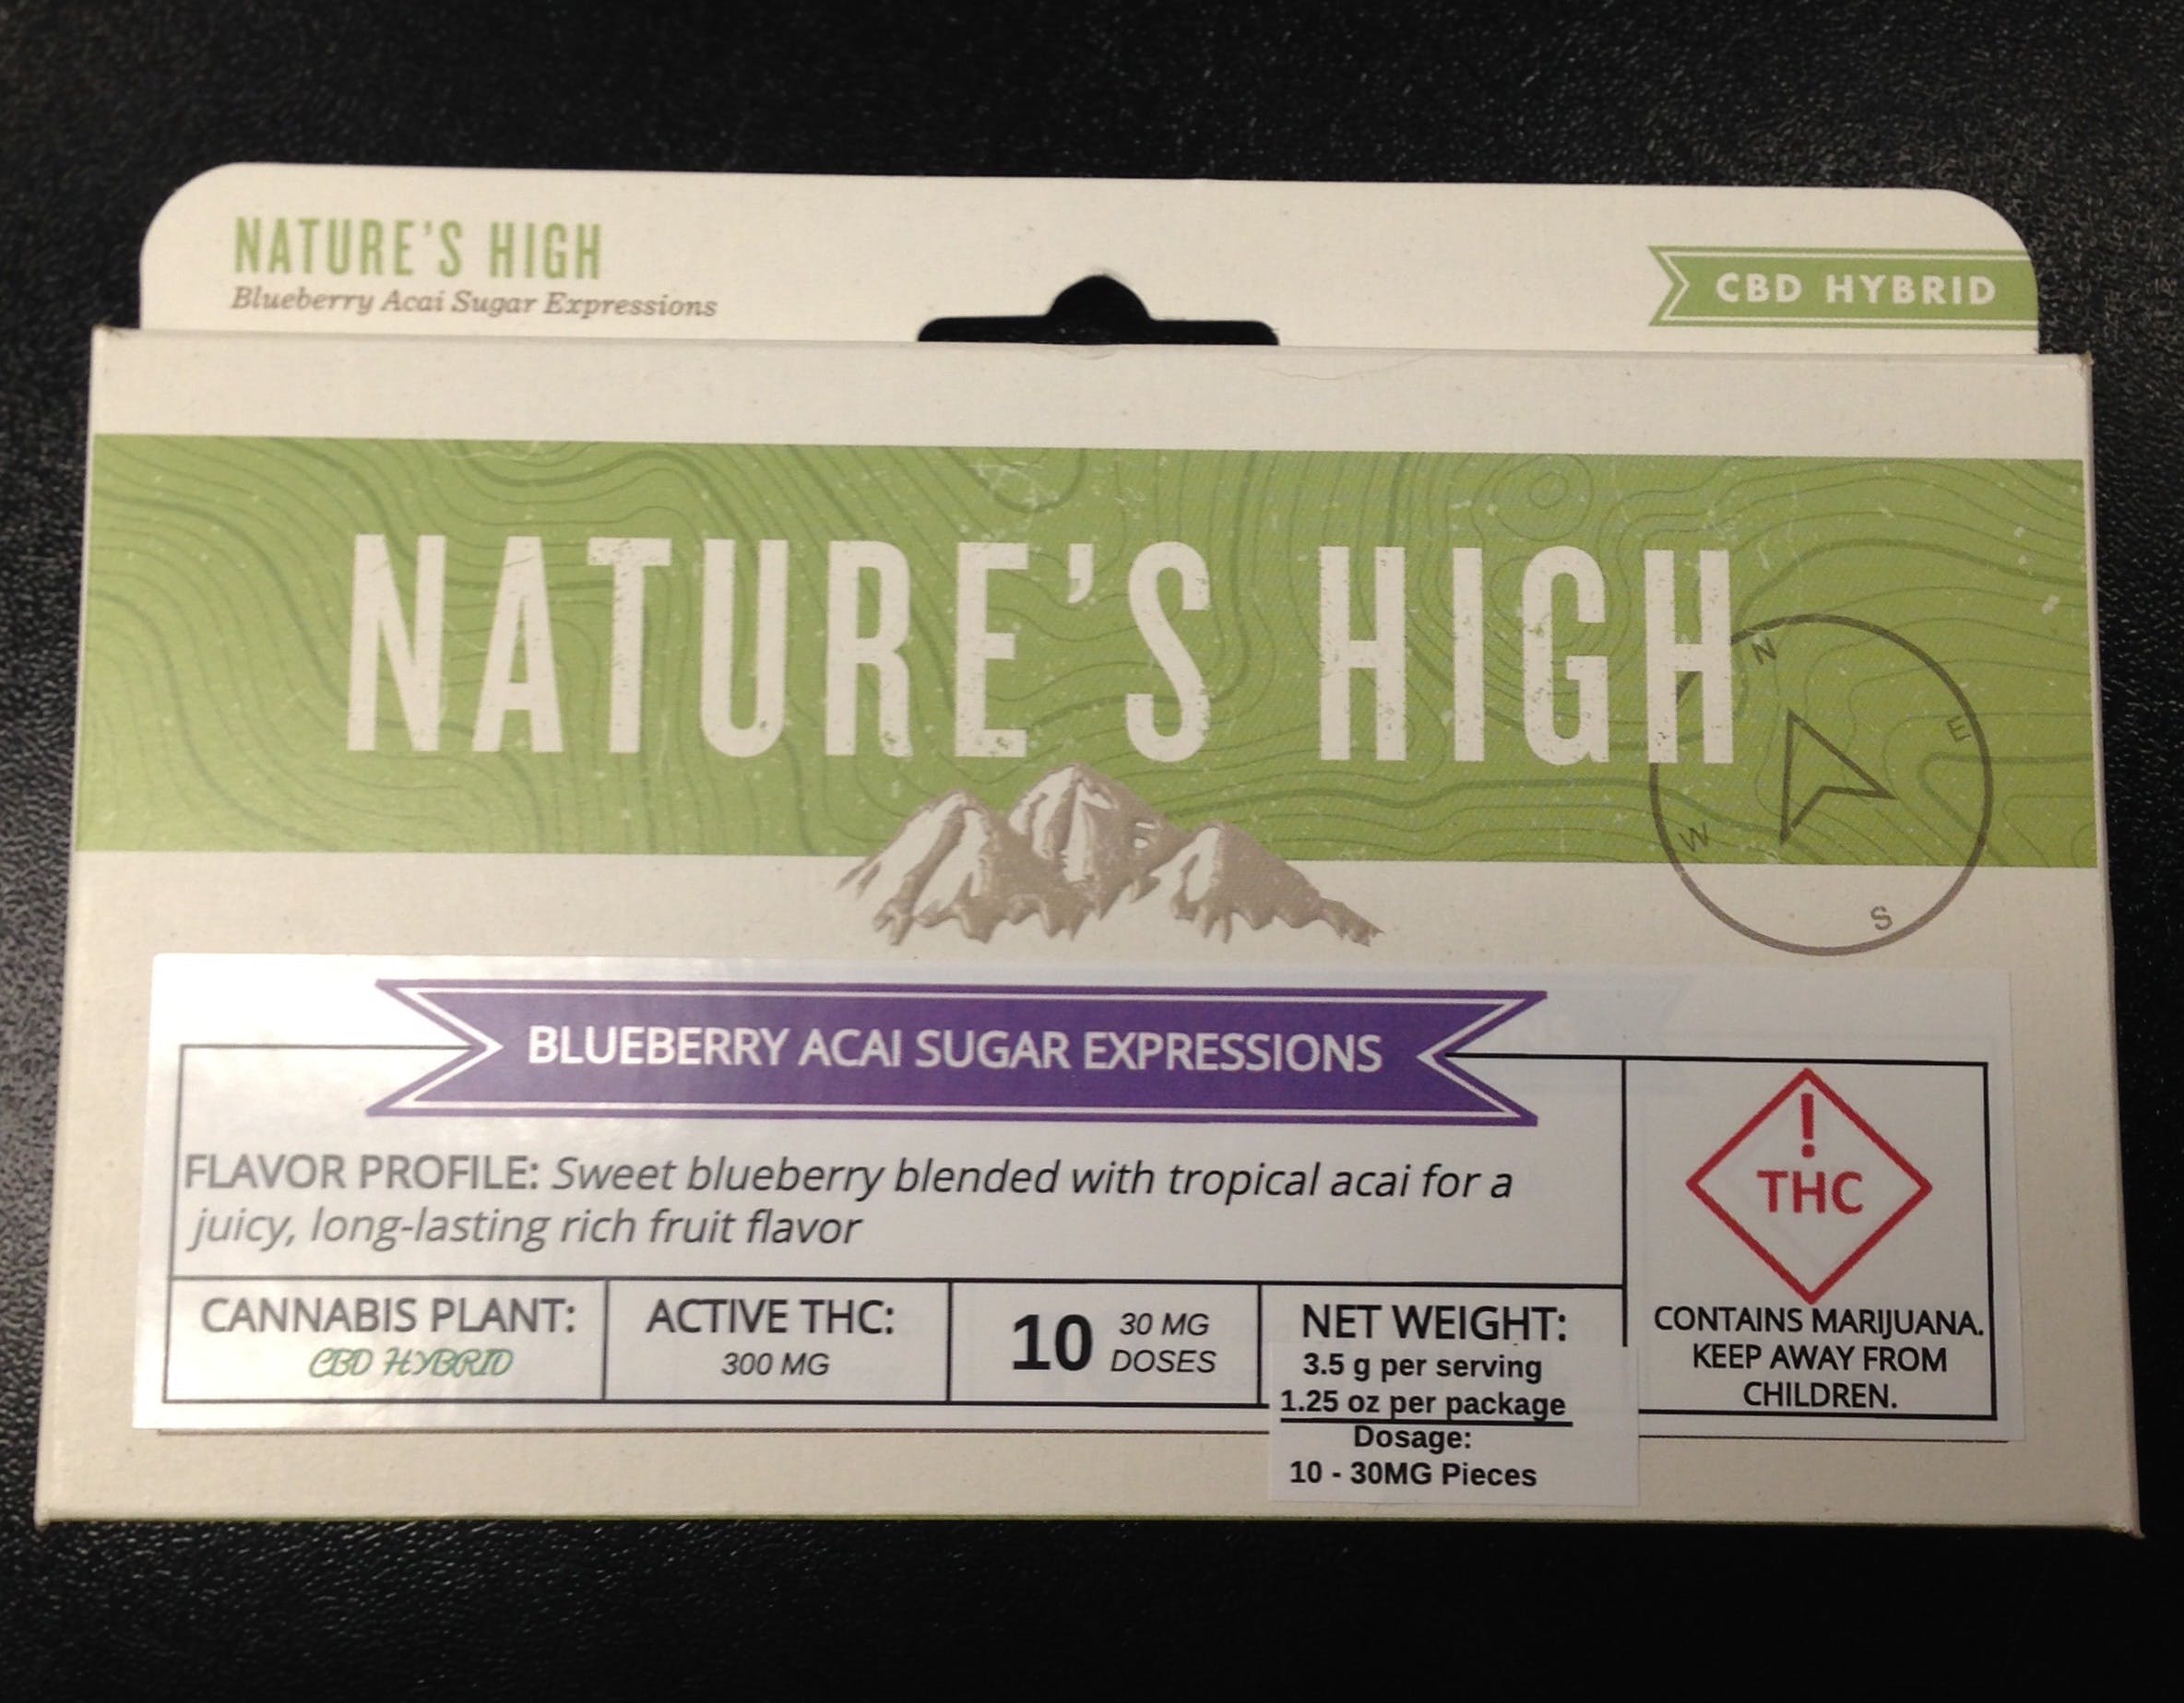 edible-natures-high-blueberry-acai-cbd-hybrid-sugar-expressions-300mg-31